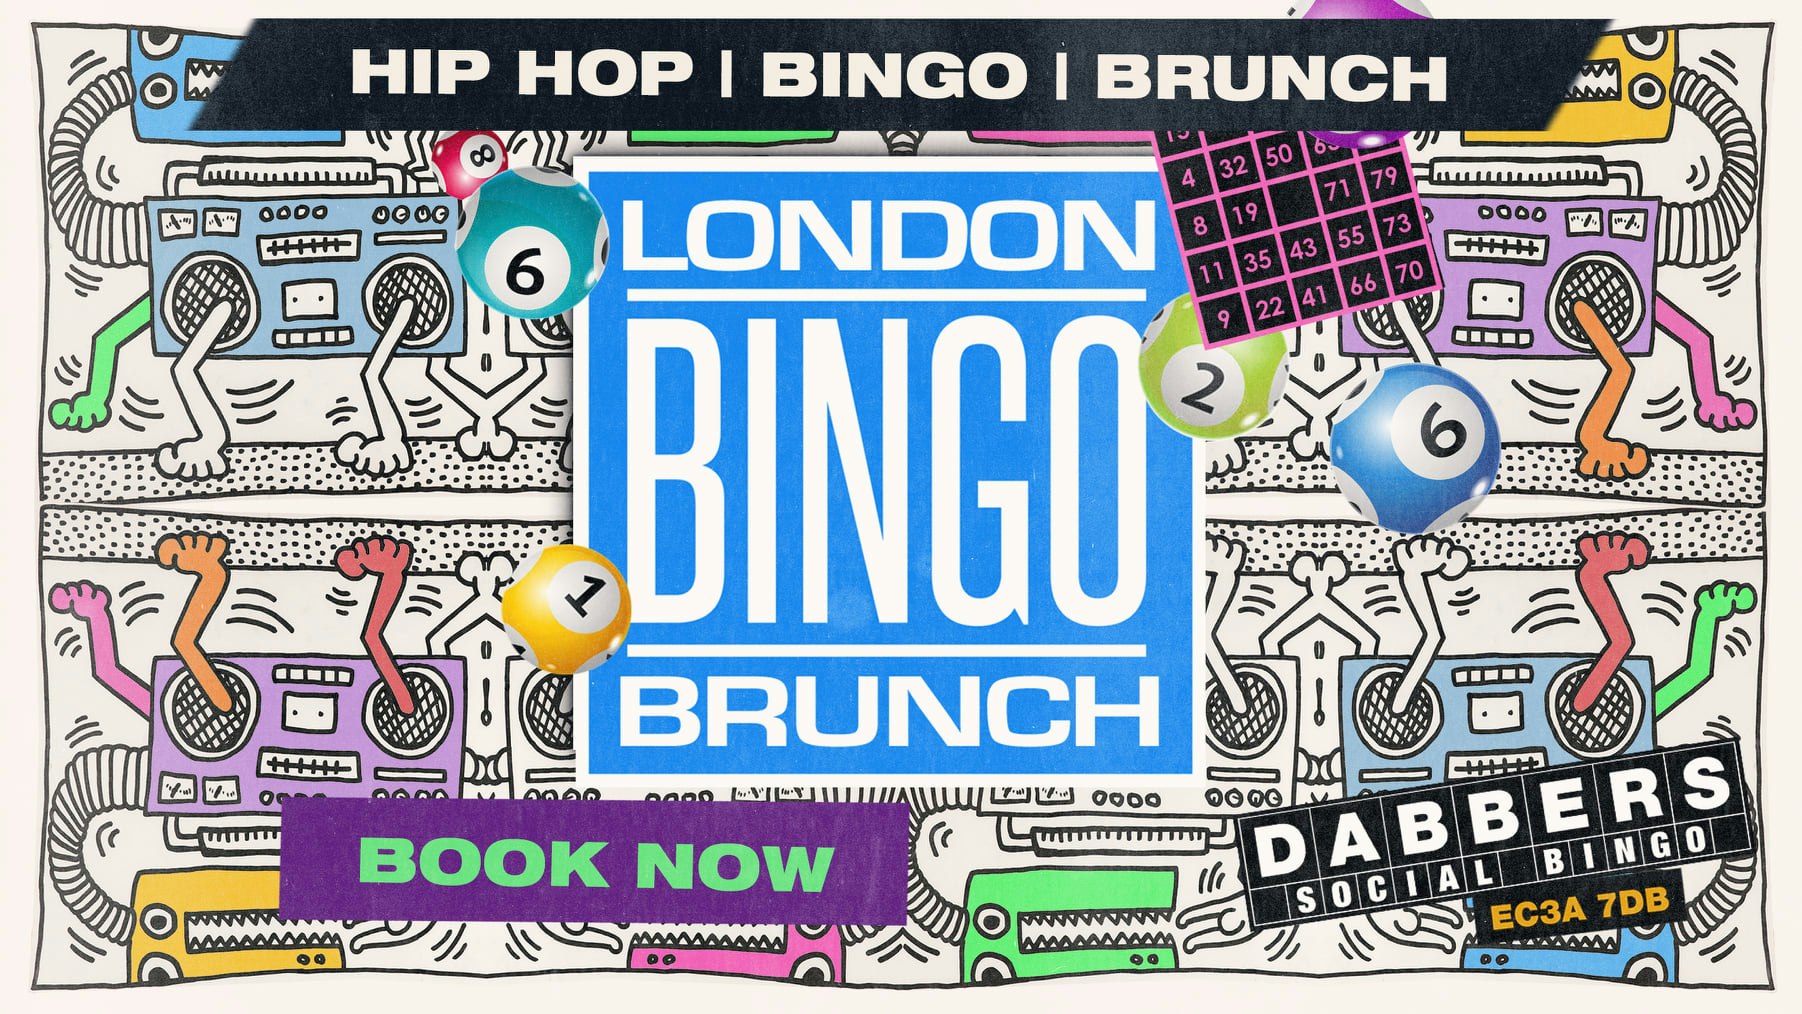 London’s Hip Hop Bingo & Brunch: All Day Hip Hop Party & Bingo Brunch Party!